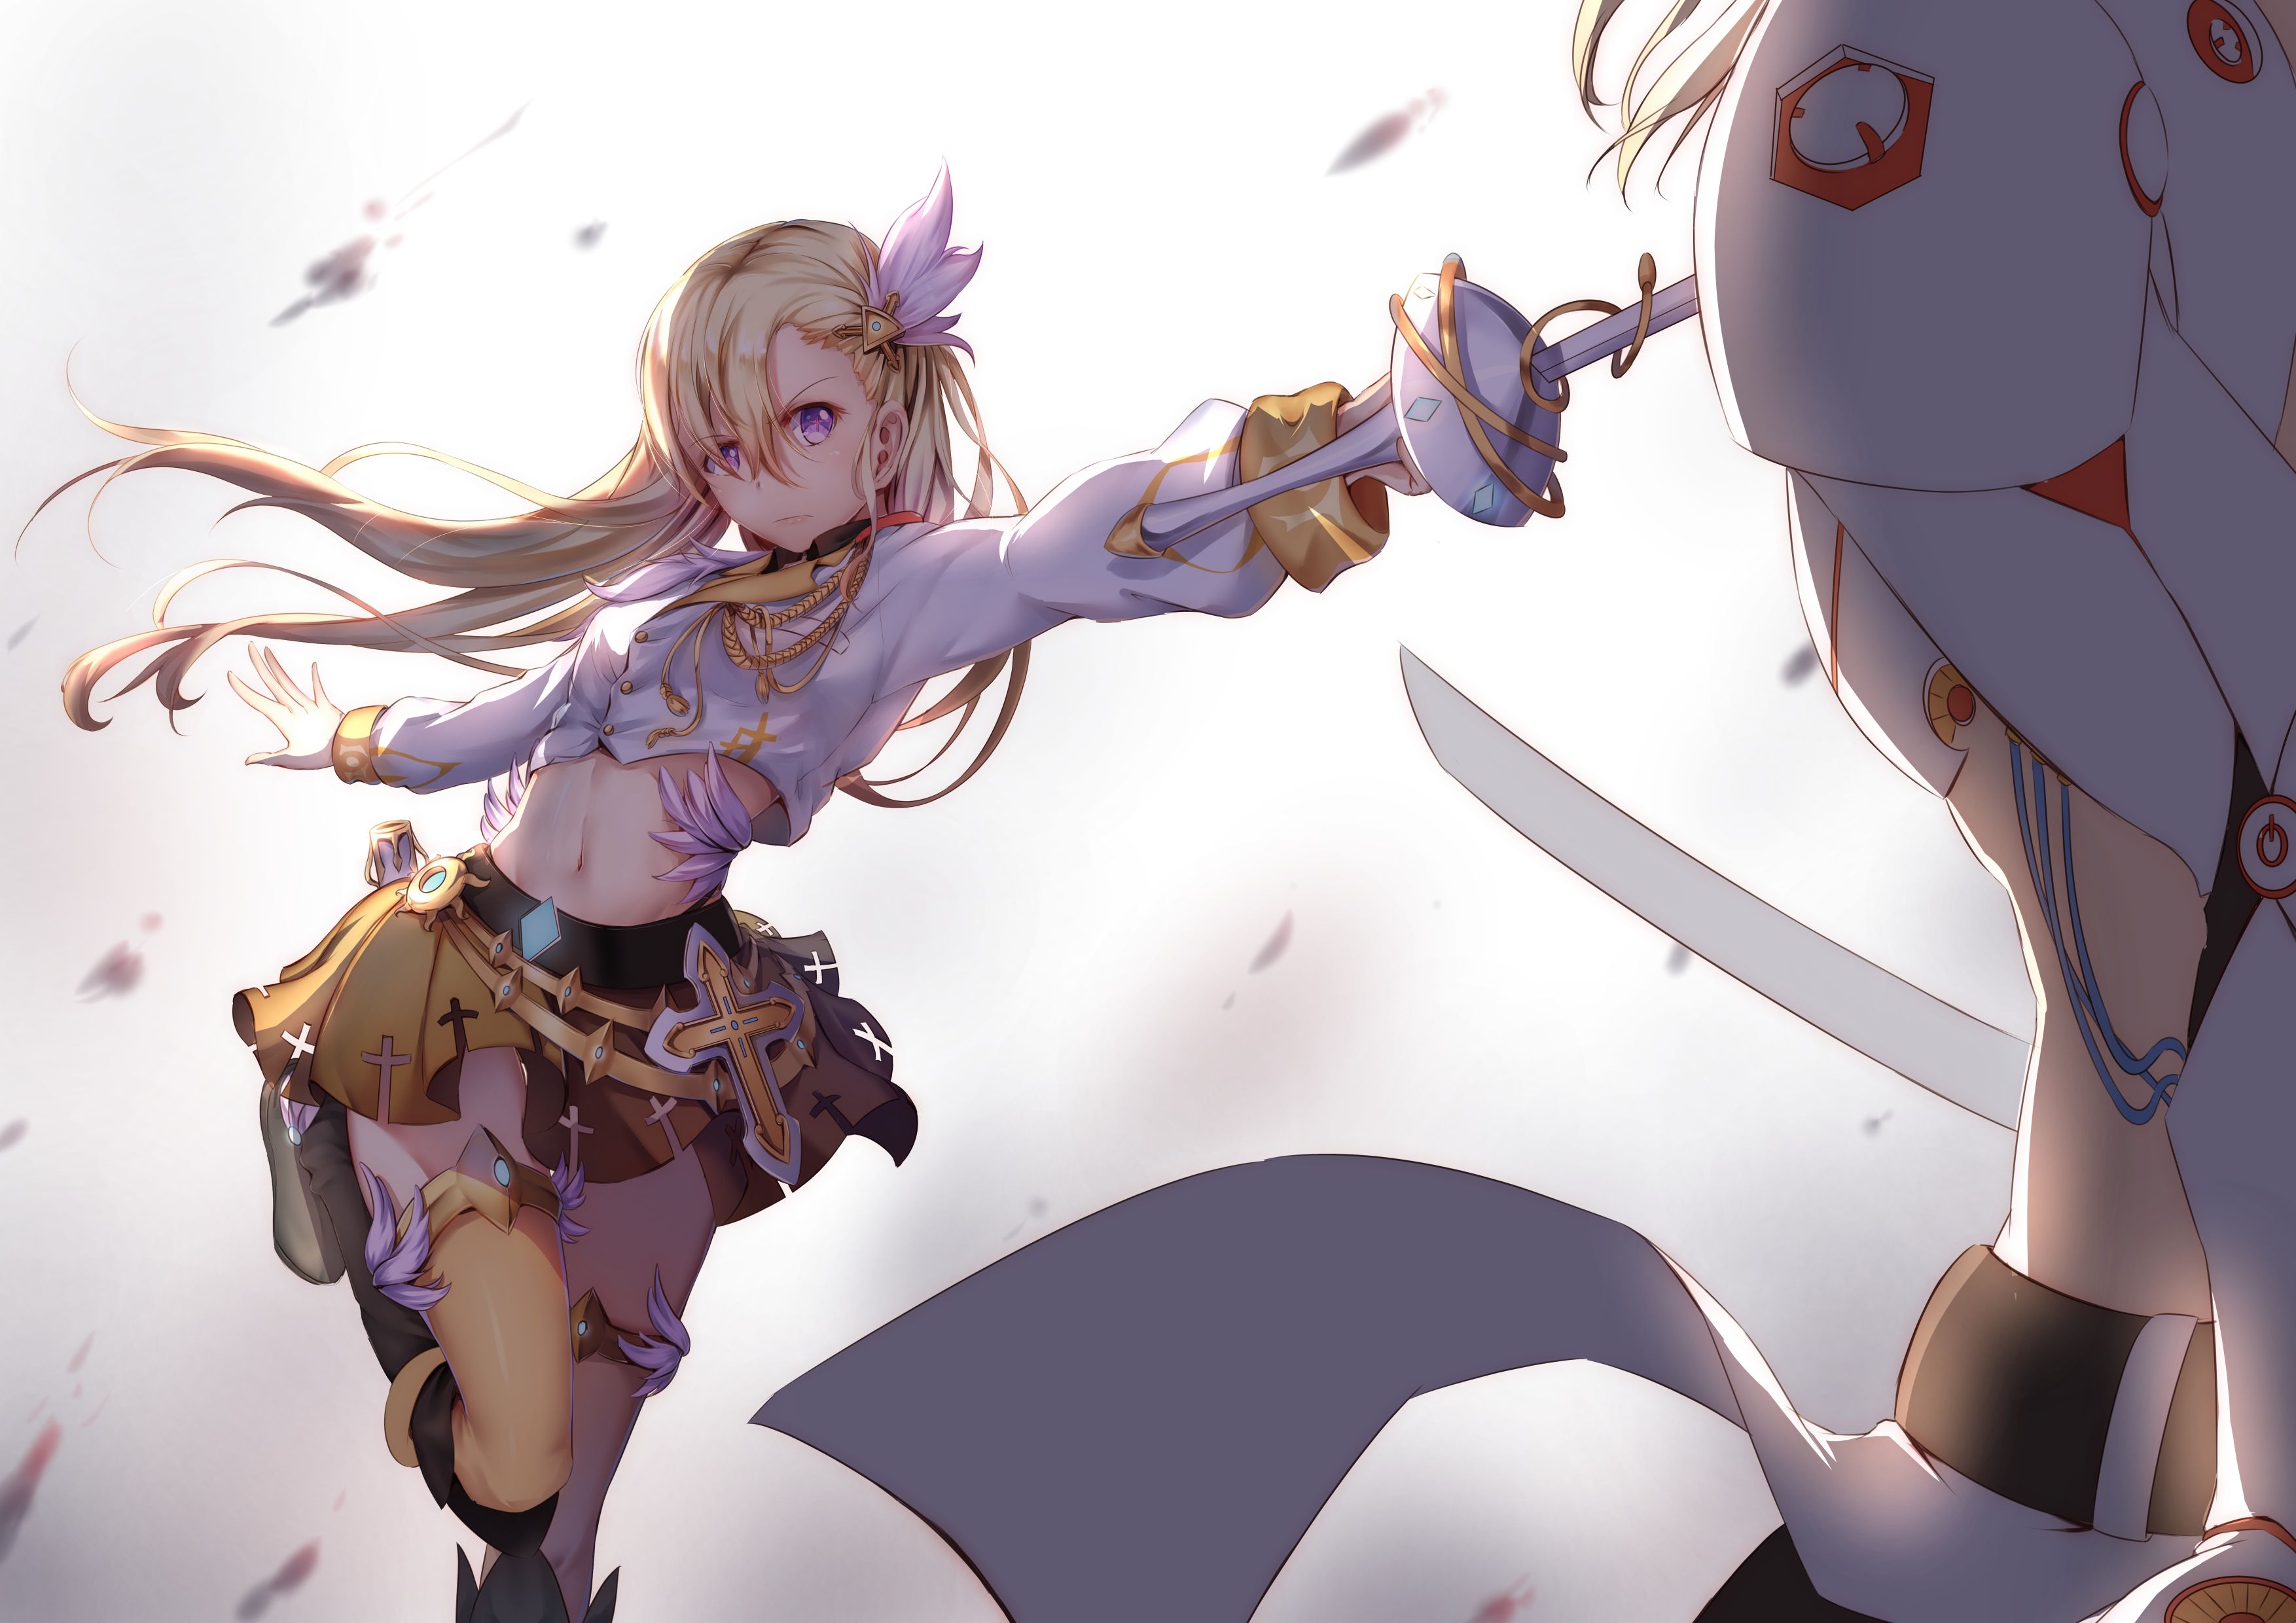 Cute Anime Girl with Sword